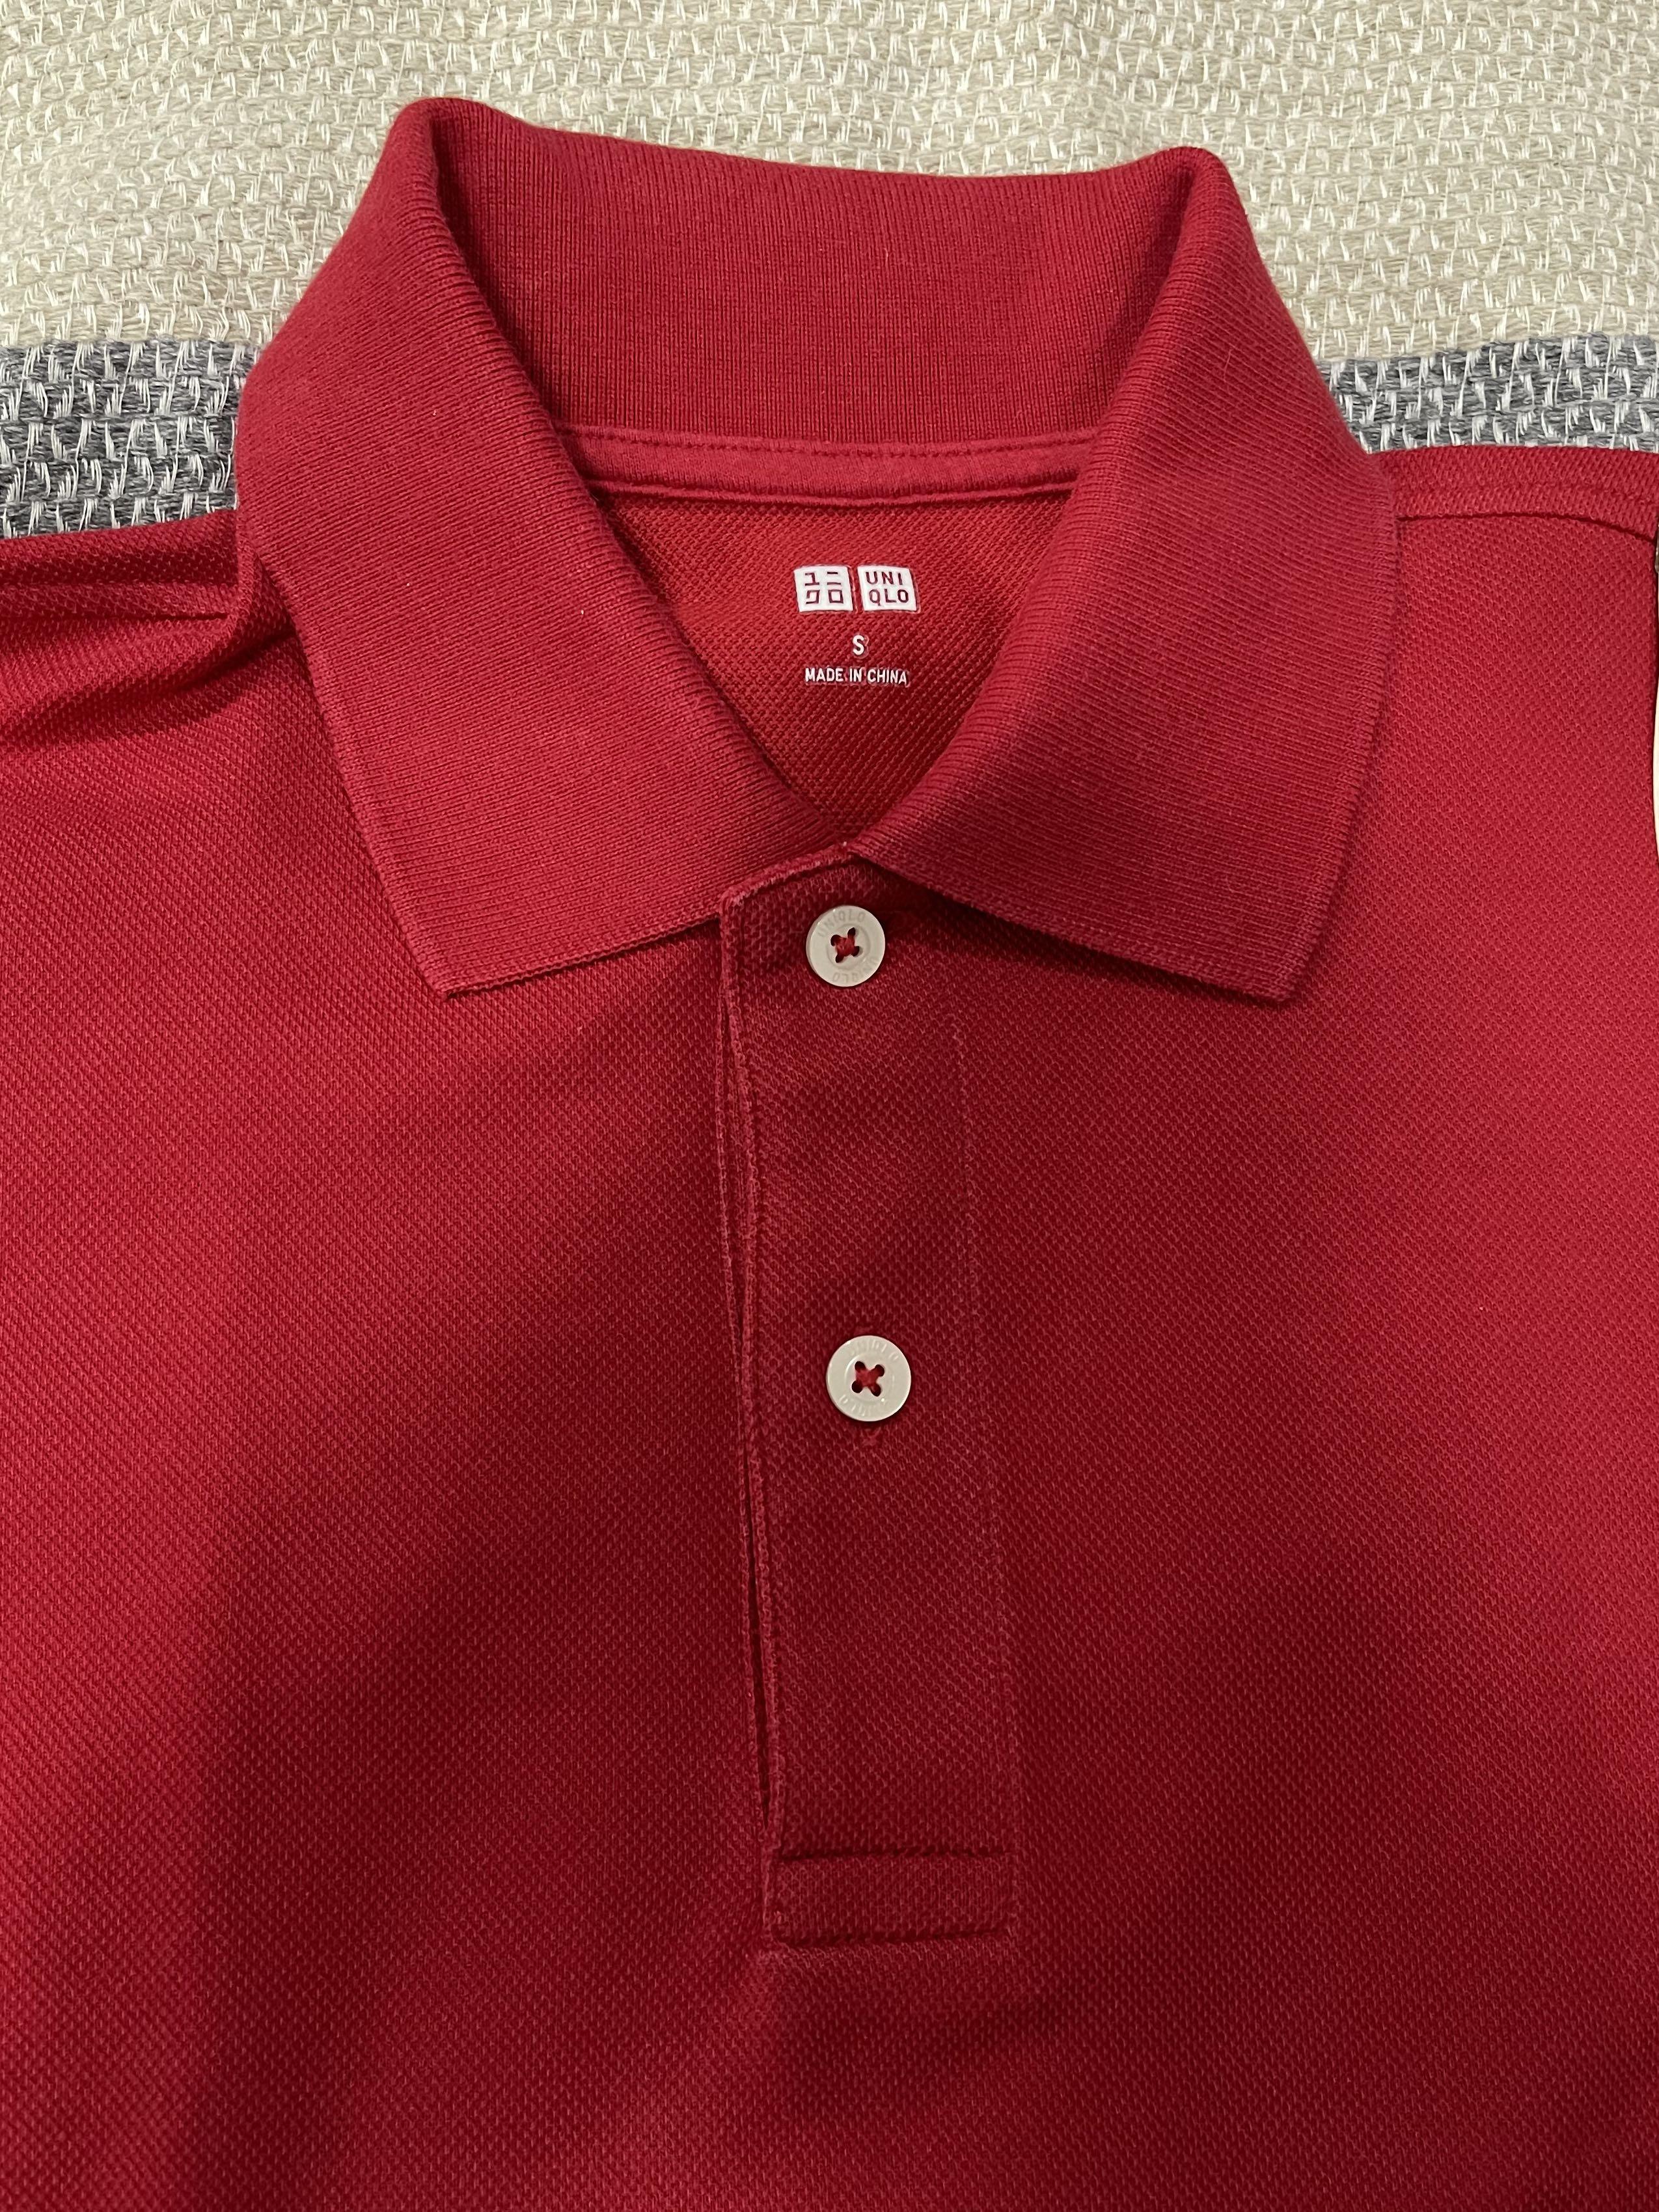 uniqlo red polo shirt